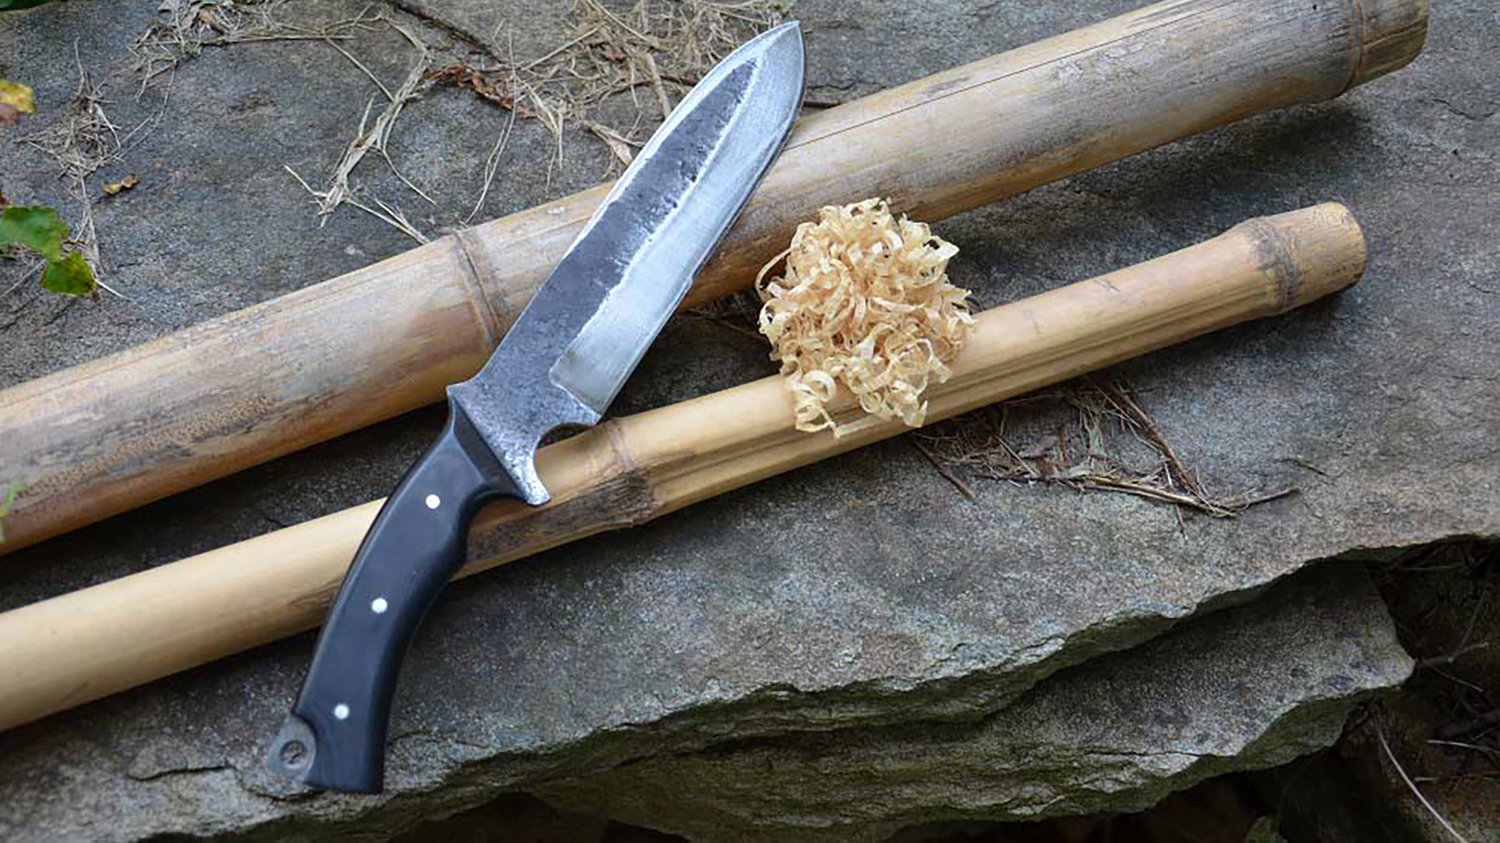 A knife shaving bamboo shoots.